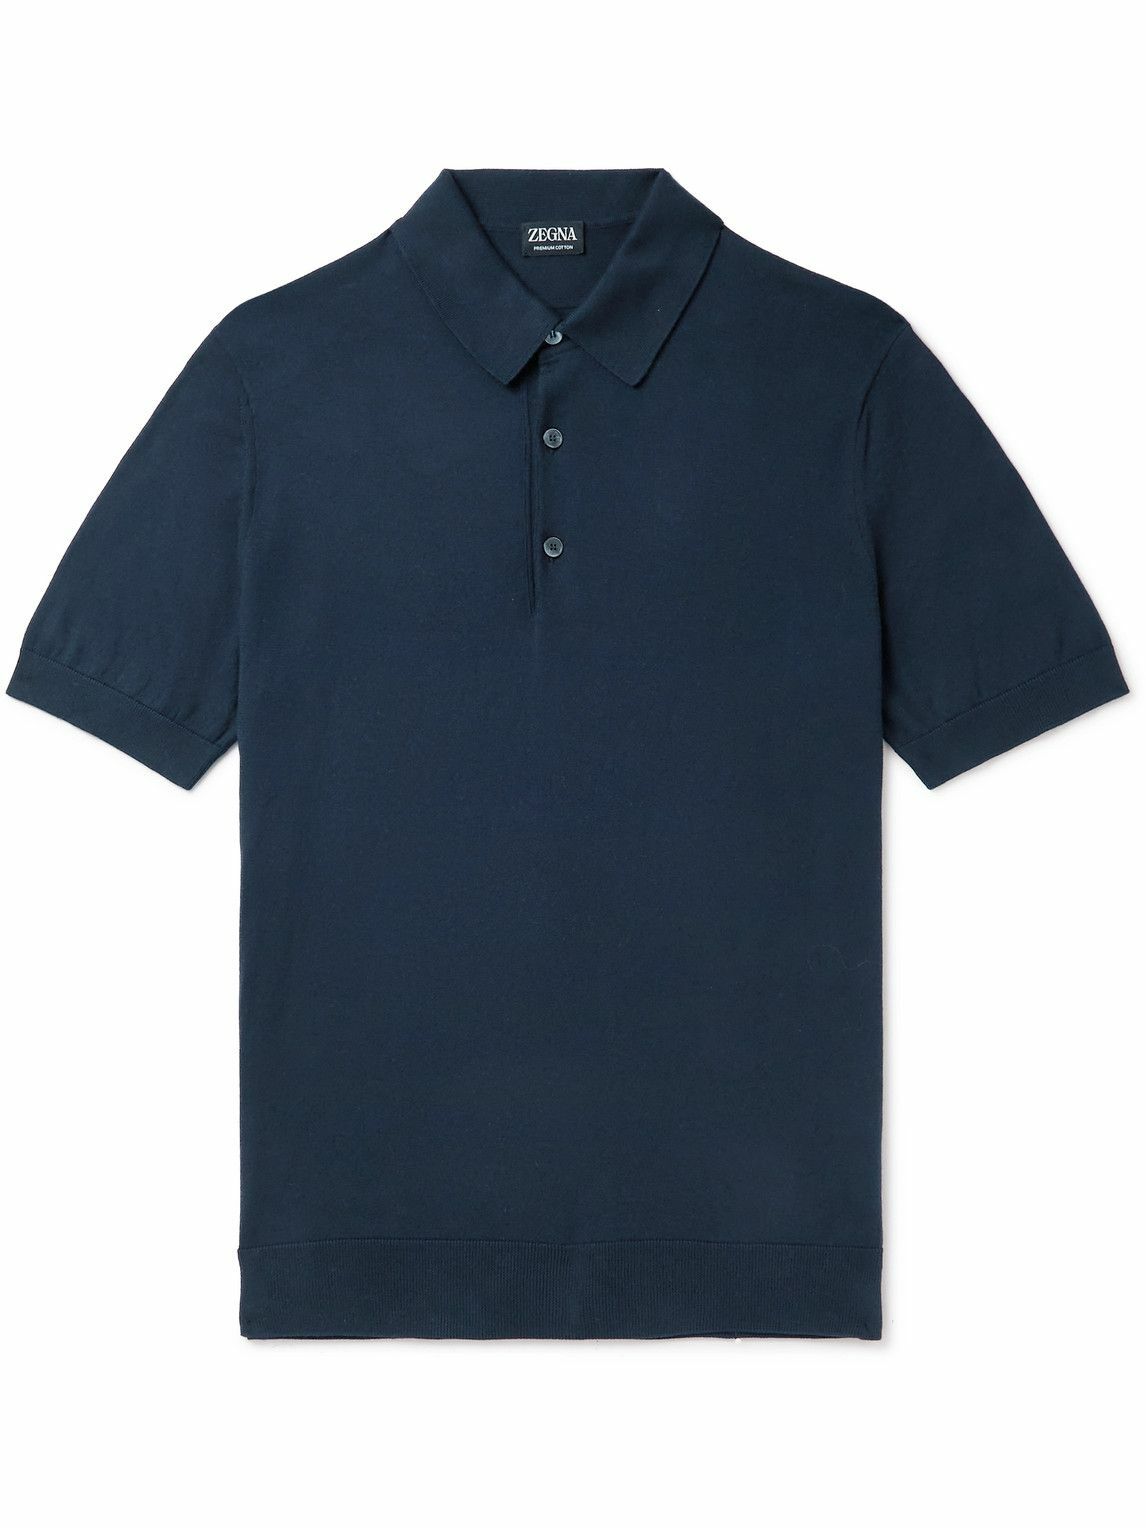 Zegna - Cotton Polo Shirt - Blue Zegna